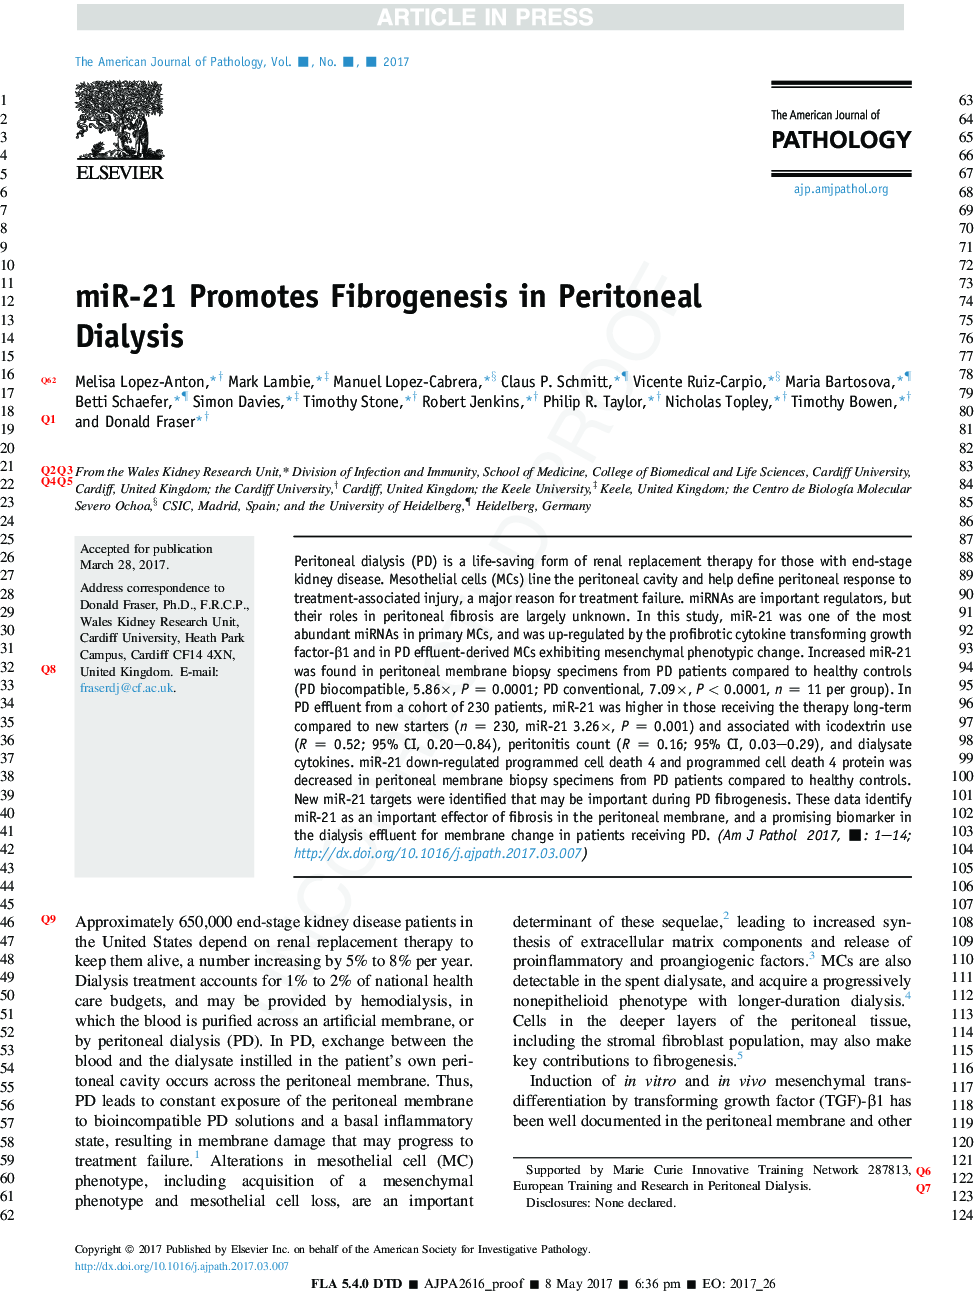 miR-21 Promotes Fibrogenesis in Peritoneal Dialysis